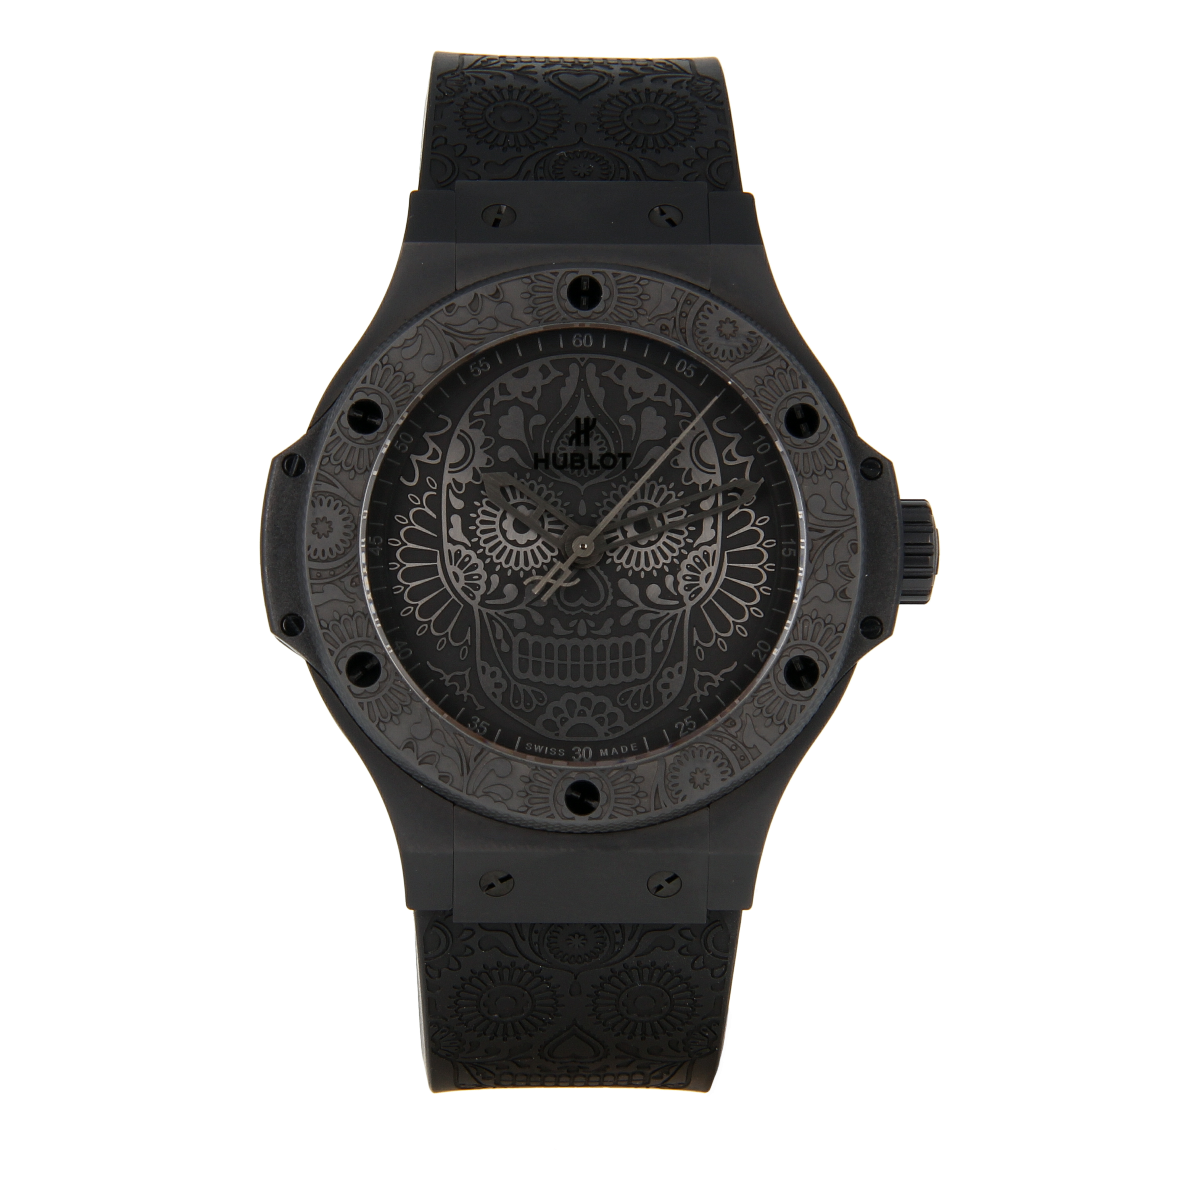 Hublot Big Bang Calaveras Ceramic Limited Ed. 30pcs | Buy pre-owned Hublot watch